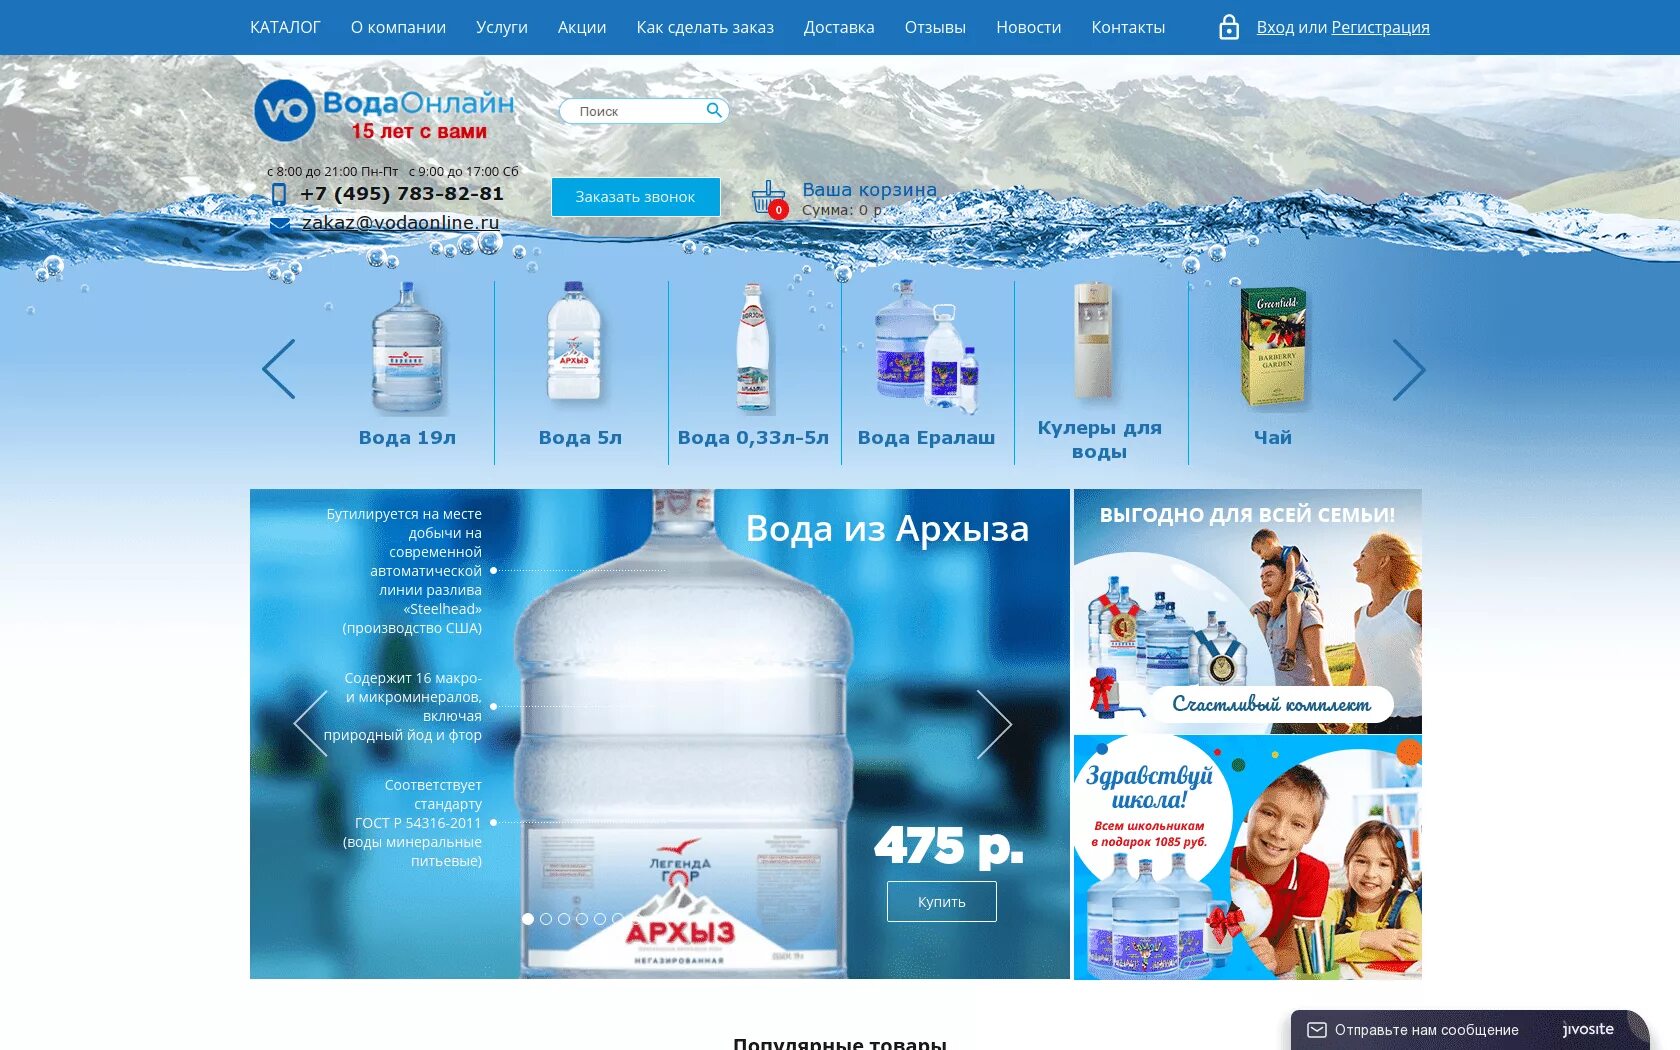 Вода интернет. Здоровая вода. Вода компании. «Вода онлайн» 19л. Компания «здоровая вода».